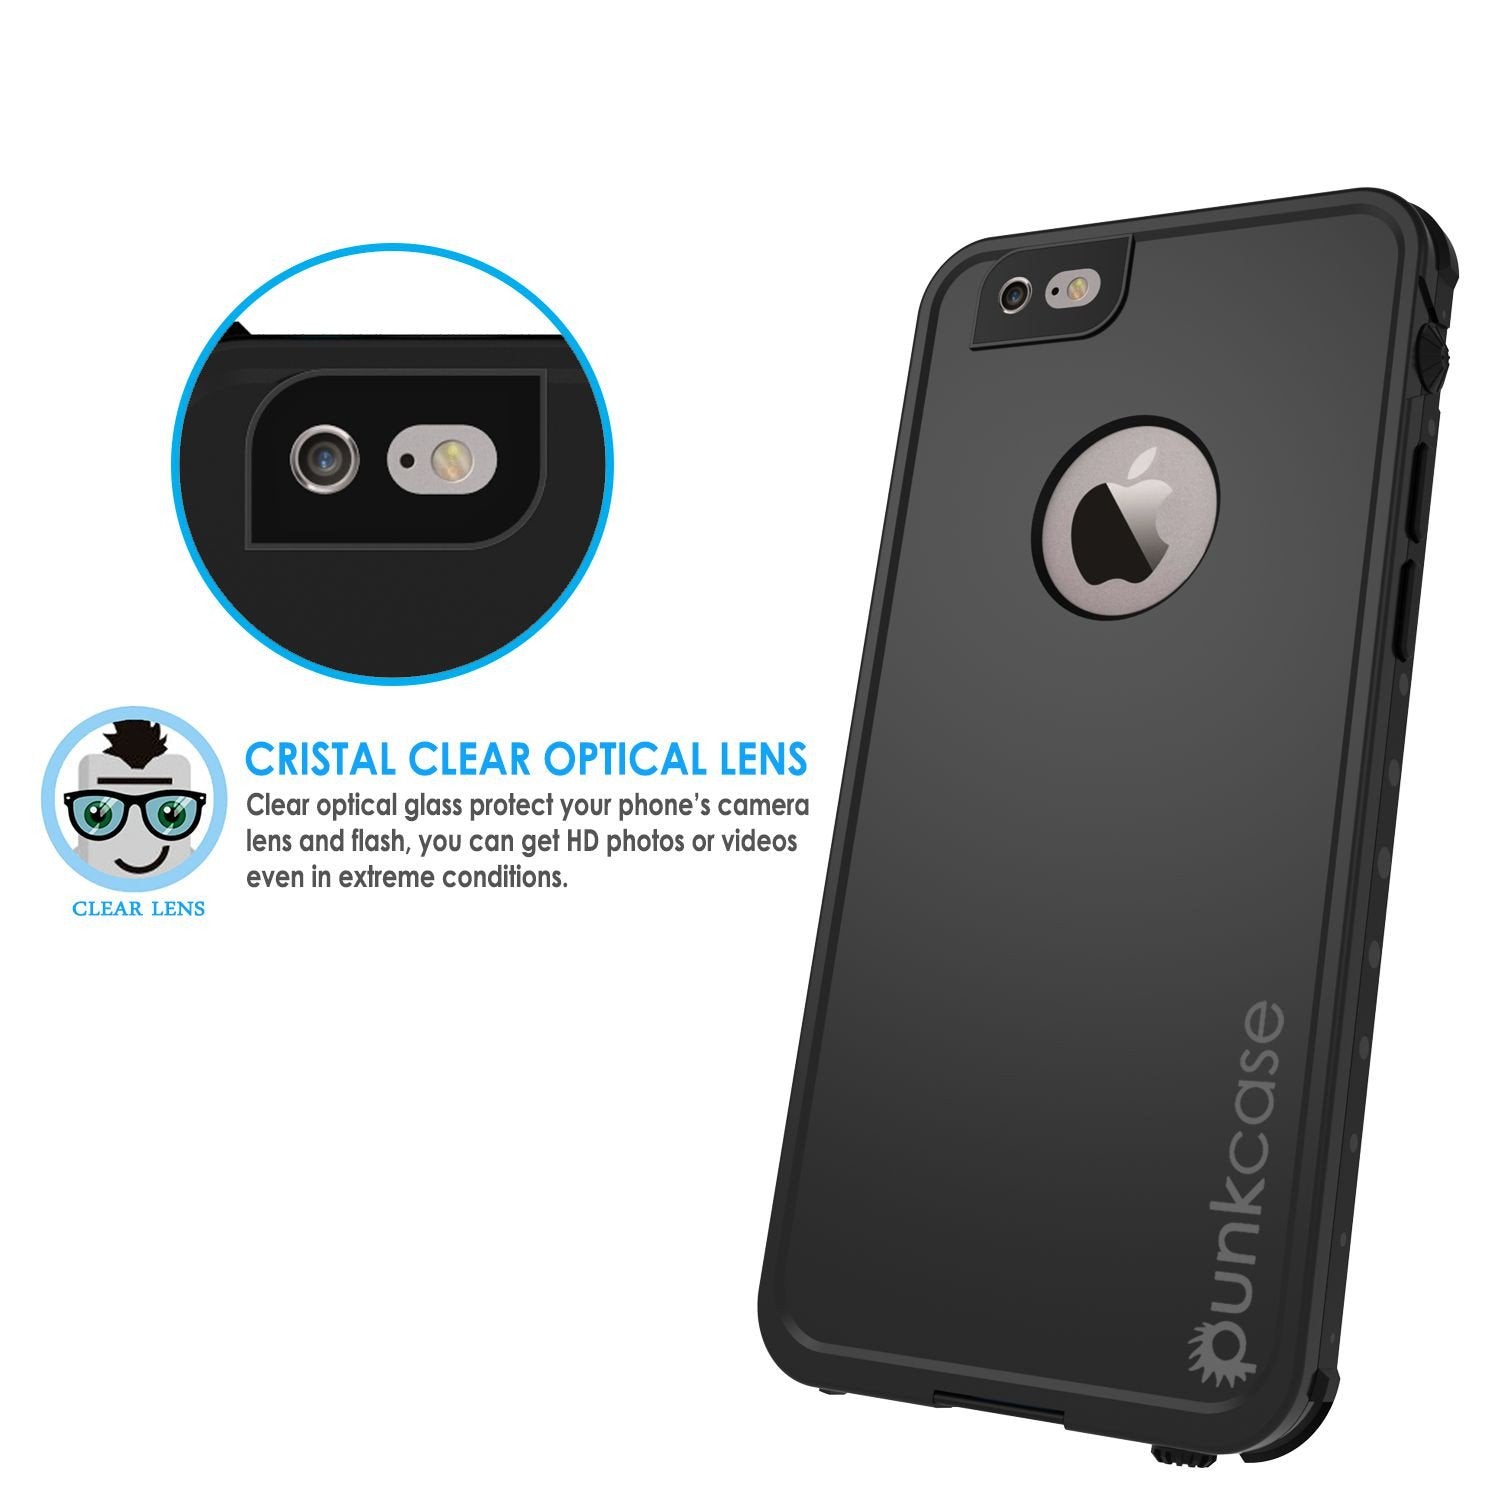 iPhone 6S+/6+ Plus Waterproof Case, PUNKcase StudStar Black w/ Attached Screen Protector | Warranty